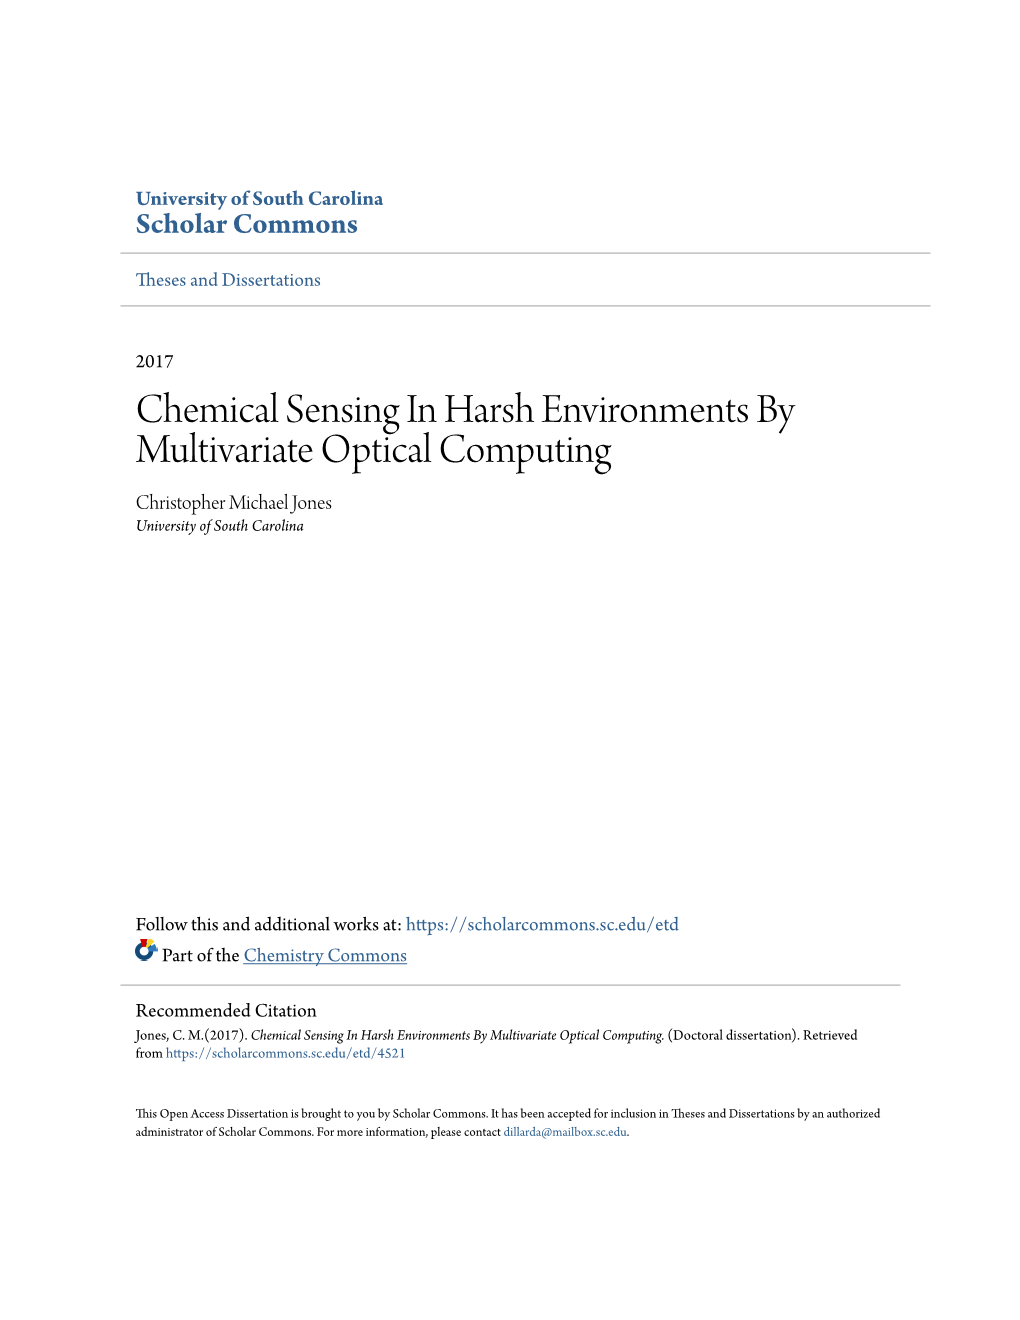 Chemical Sensing in Harsh Environments by Multivariate Optical Computing Christopher Michael Jones University of South Carolina